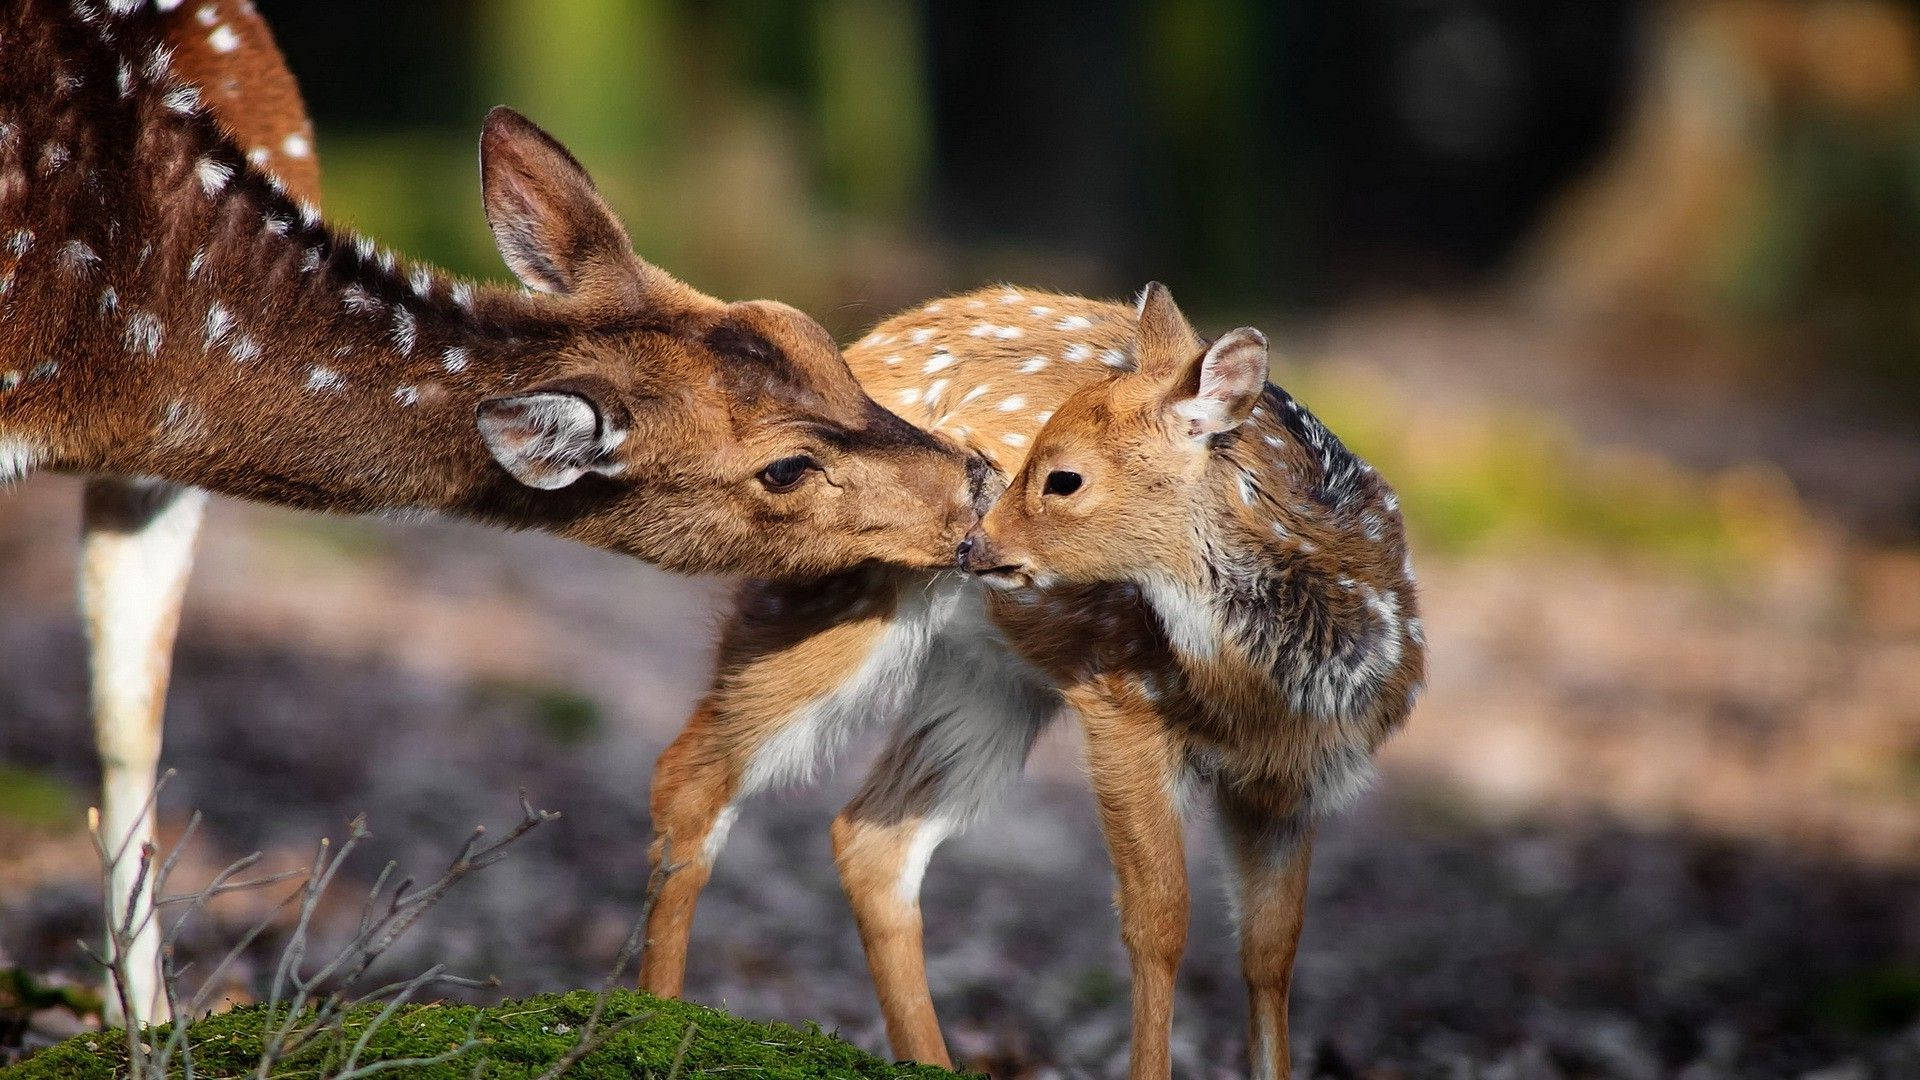 Sweet Baby Deer Animal Background